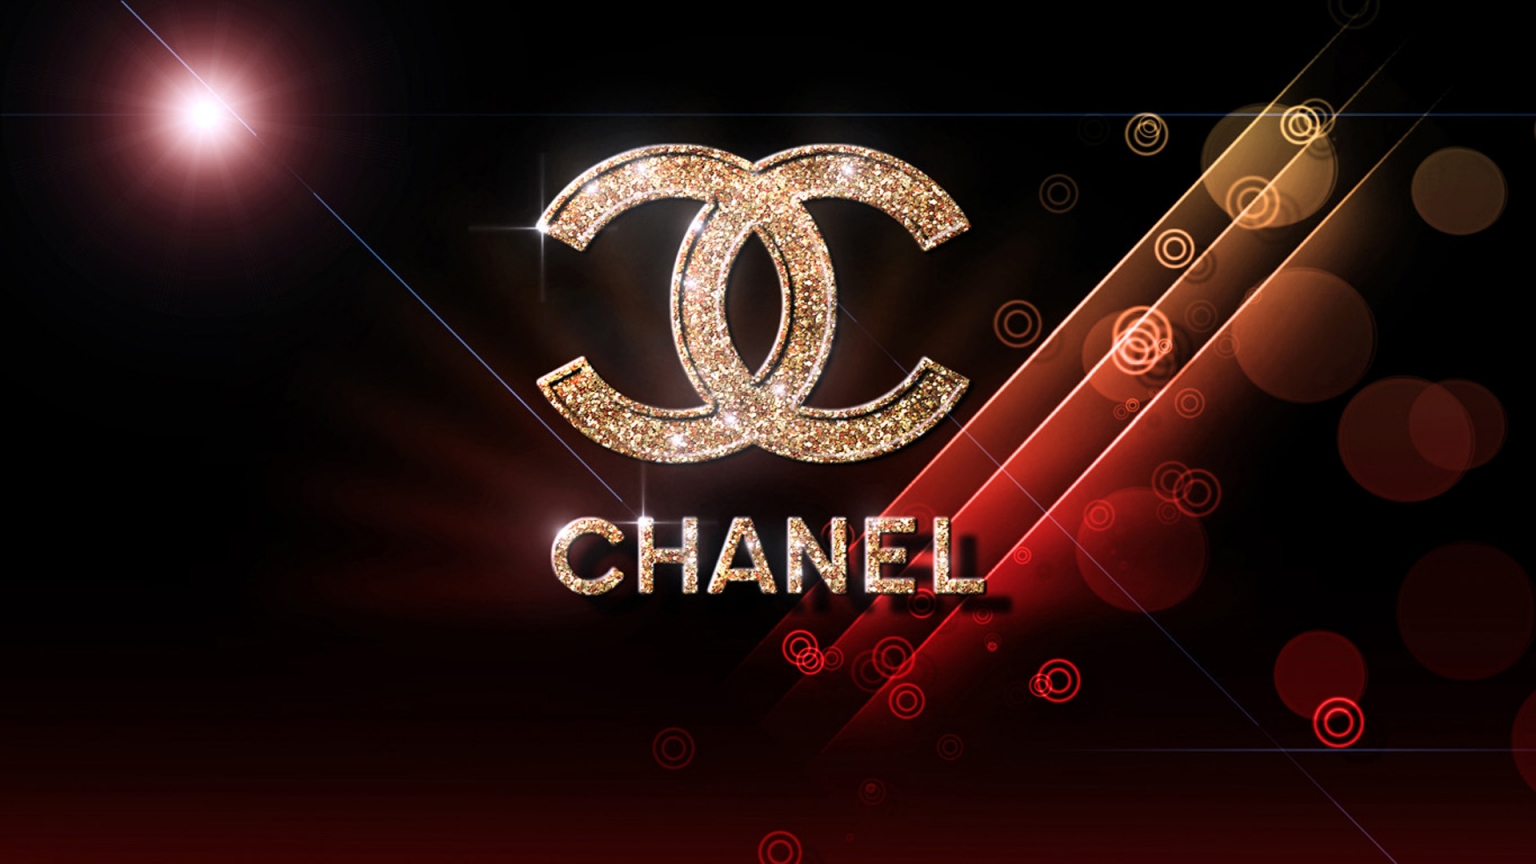 Chanel Logo for 1536 x 864 HDTV resolution